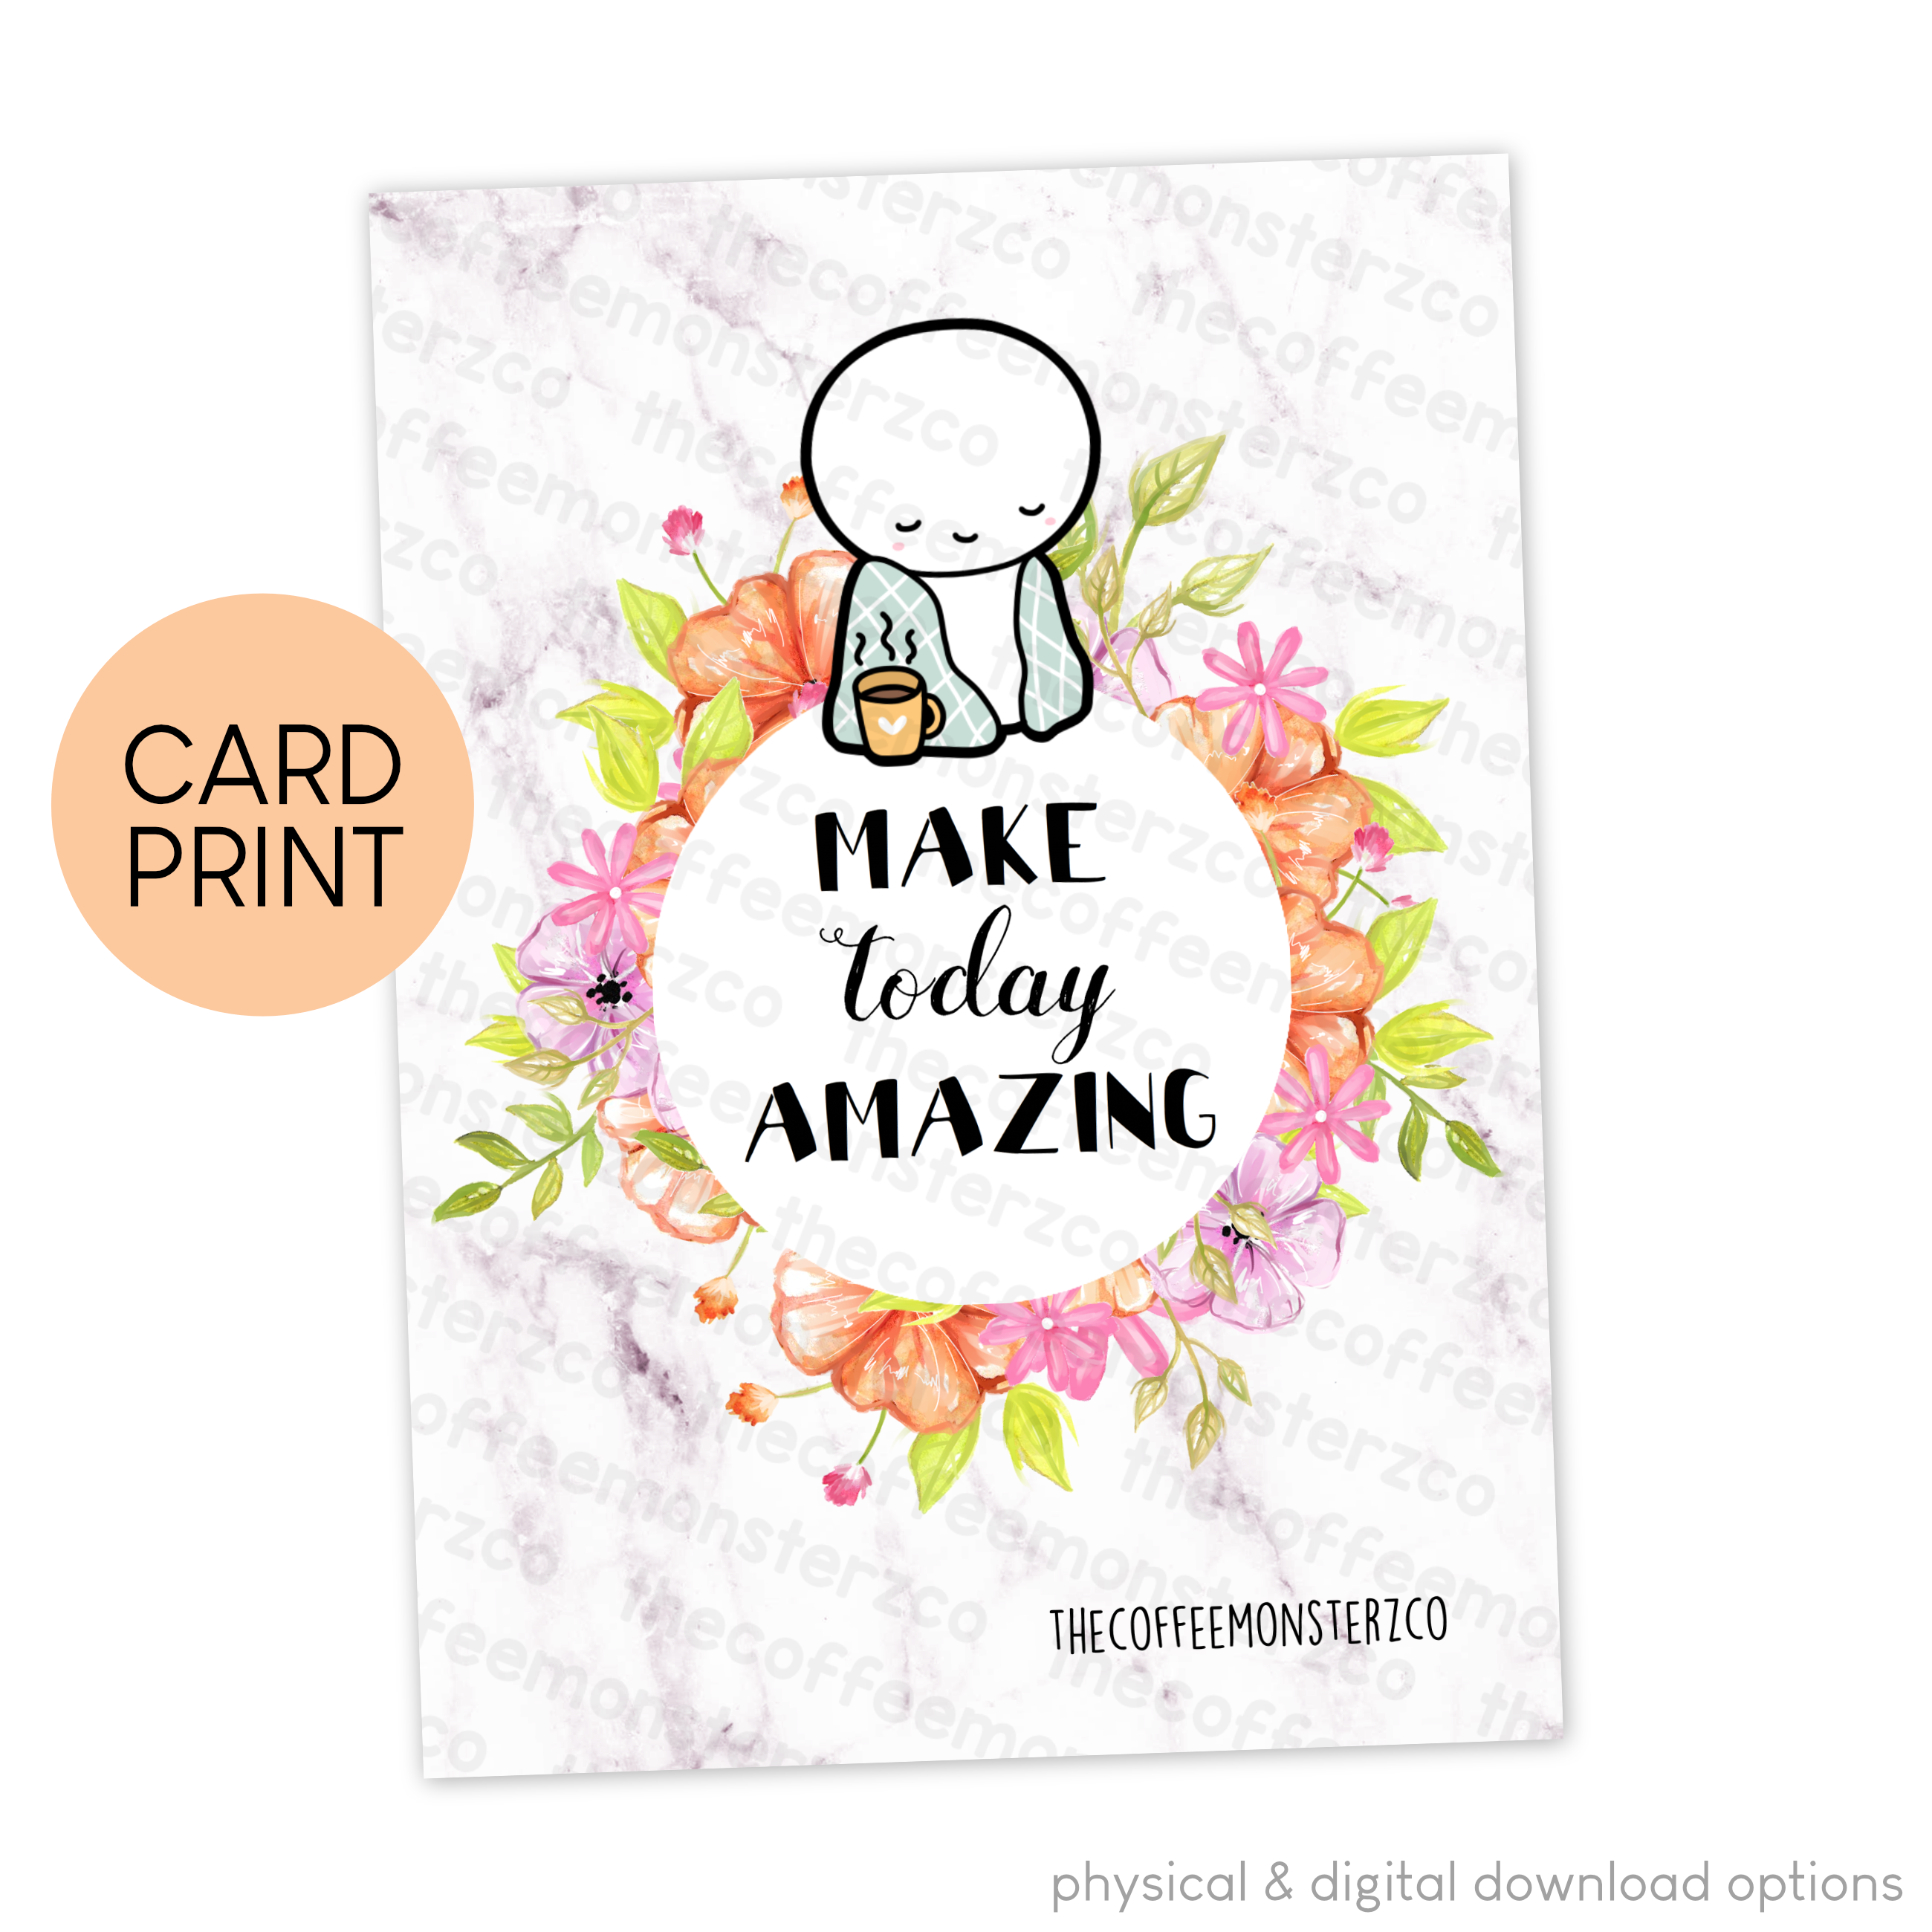 Make Today Amazing - Card Print